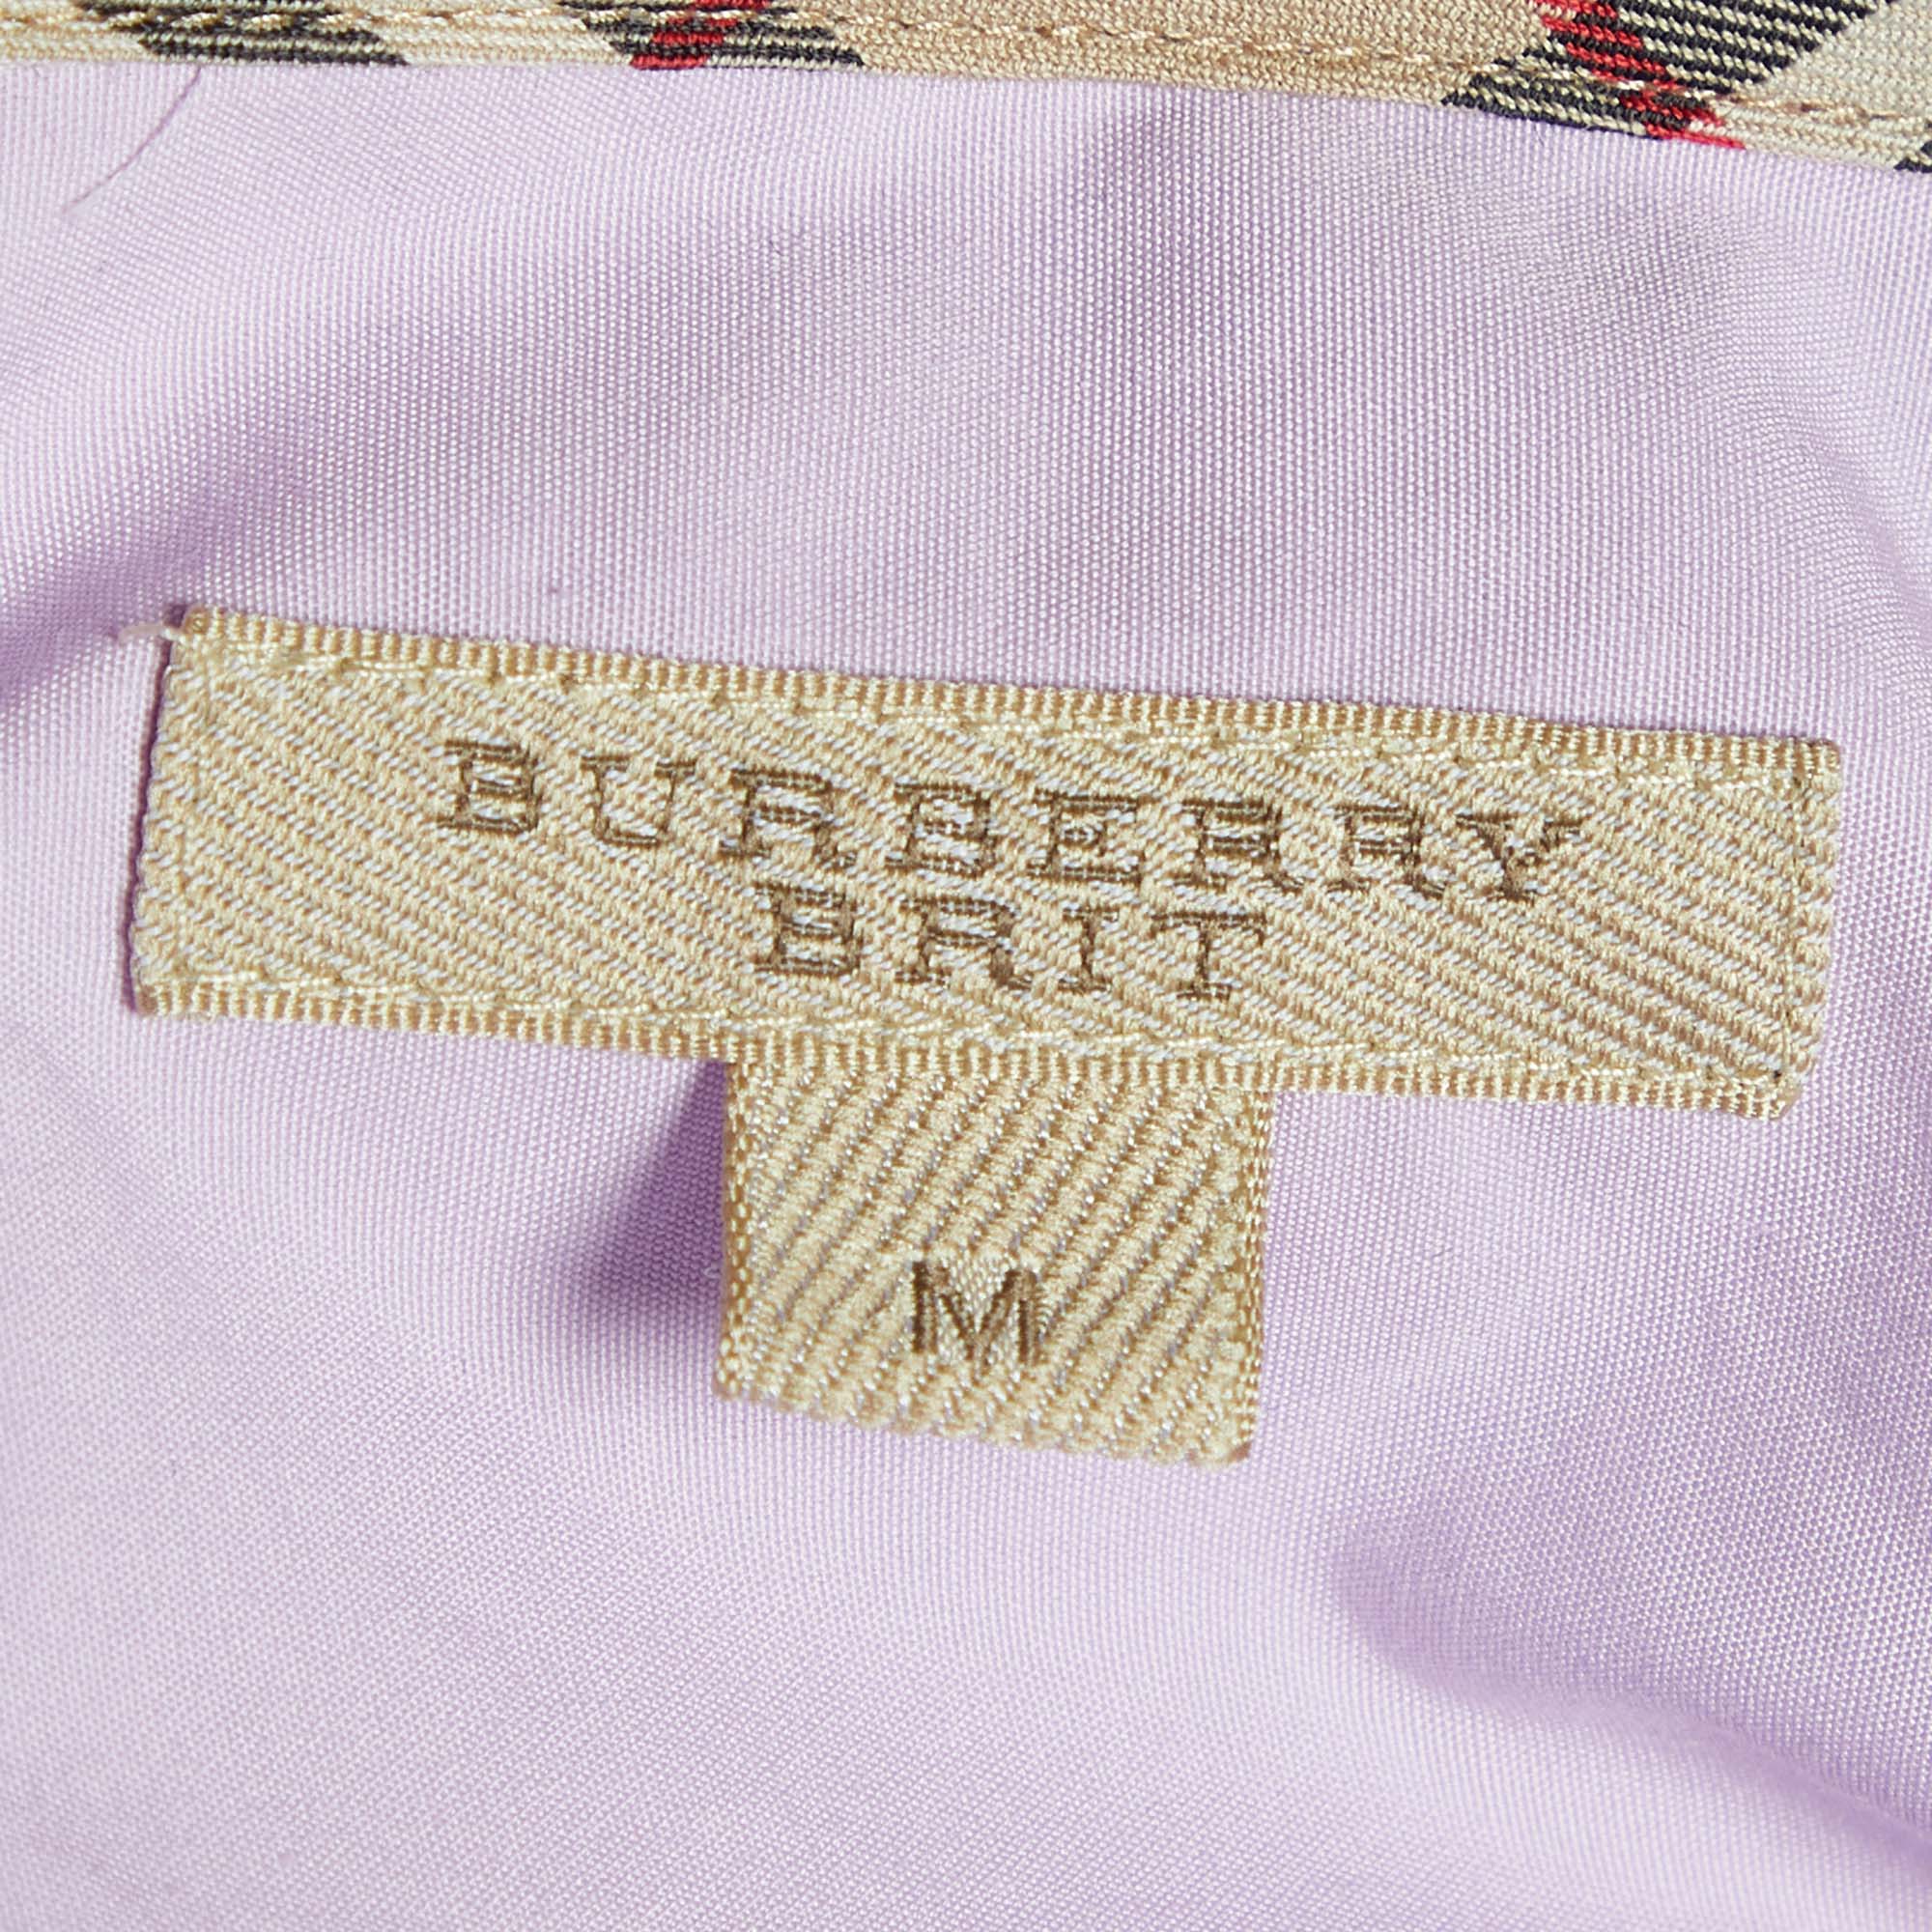 Burberry Brit Light Pink Cotton Button Front Shirt M